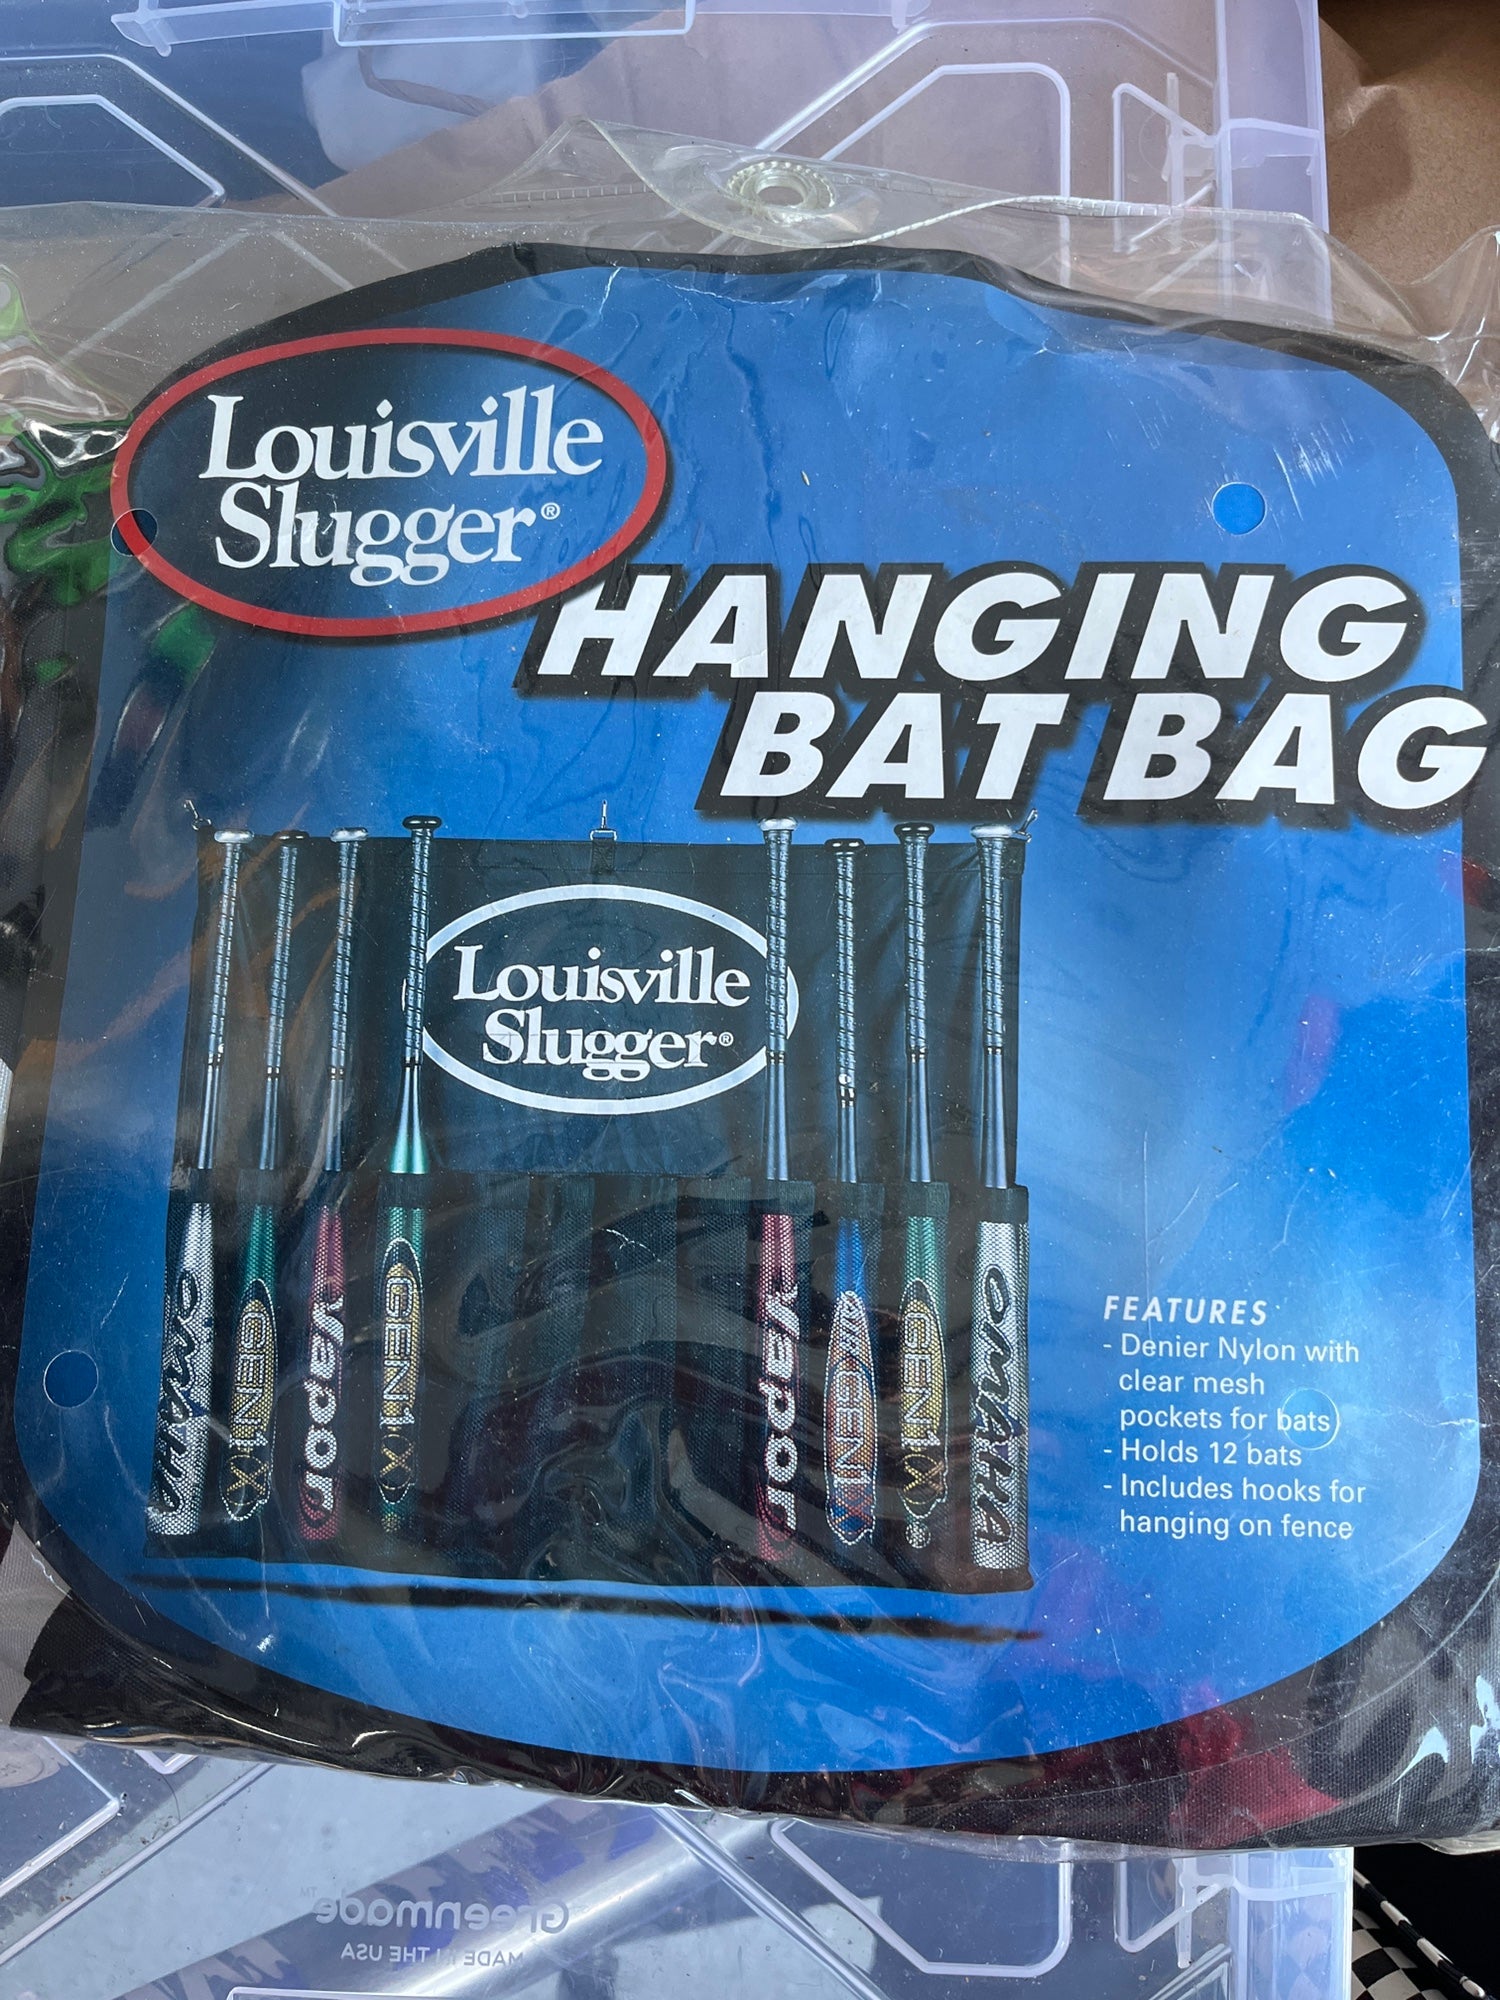 Louisville Slugger Coach's Briefcase - Black